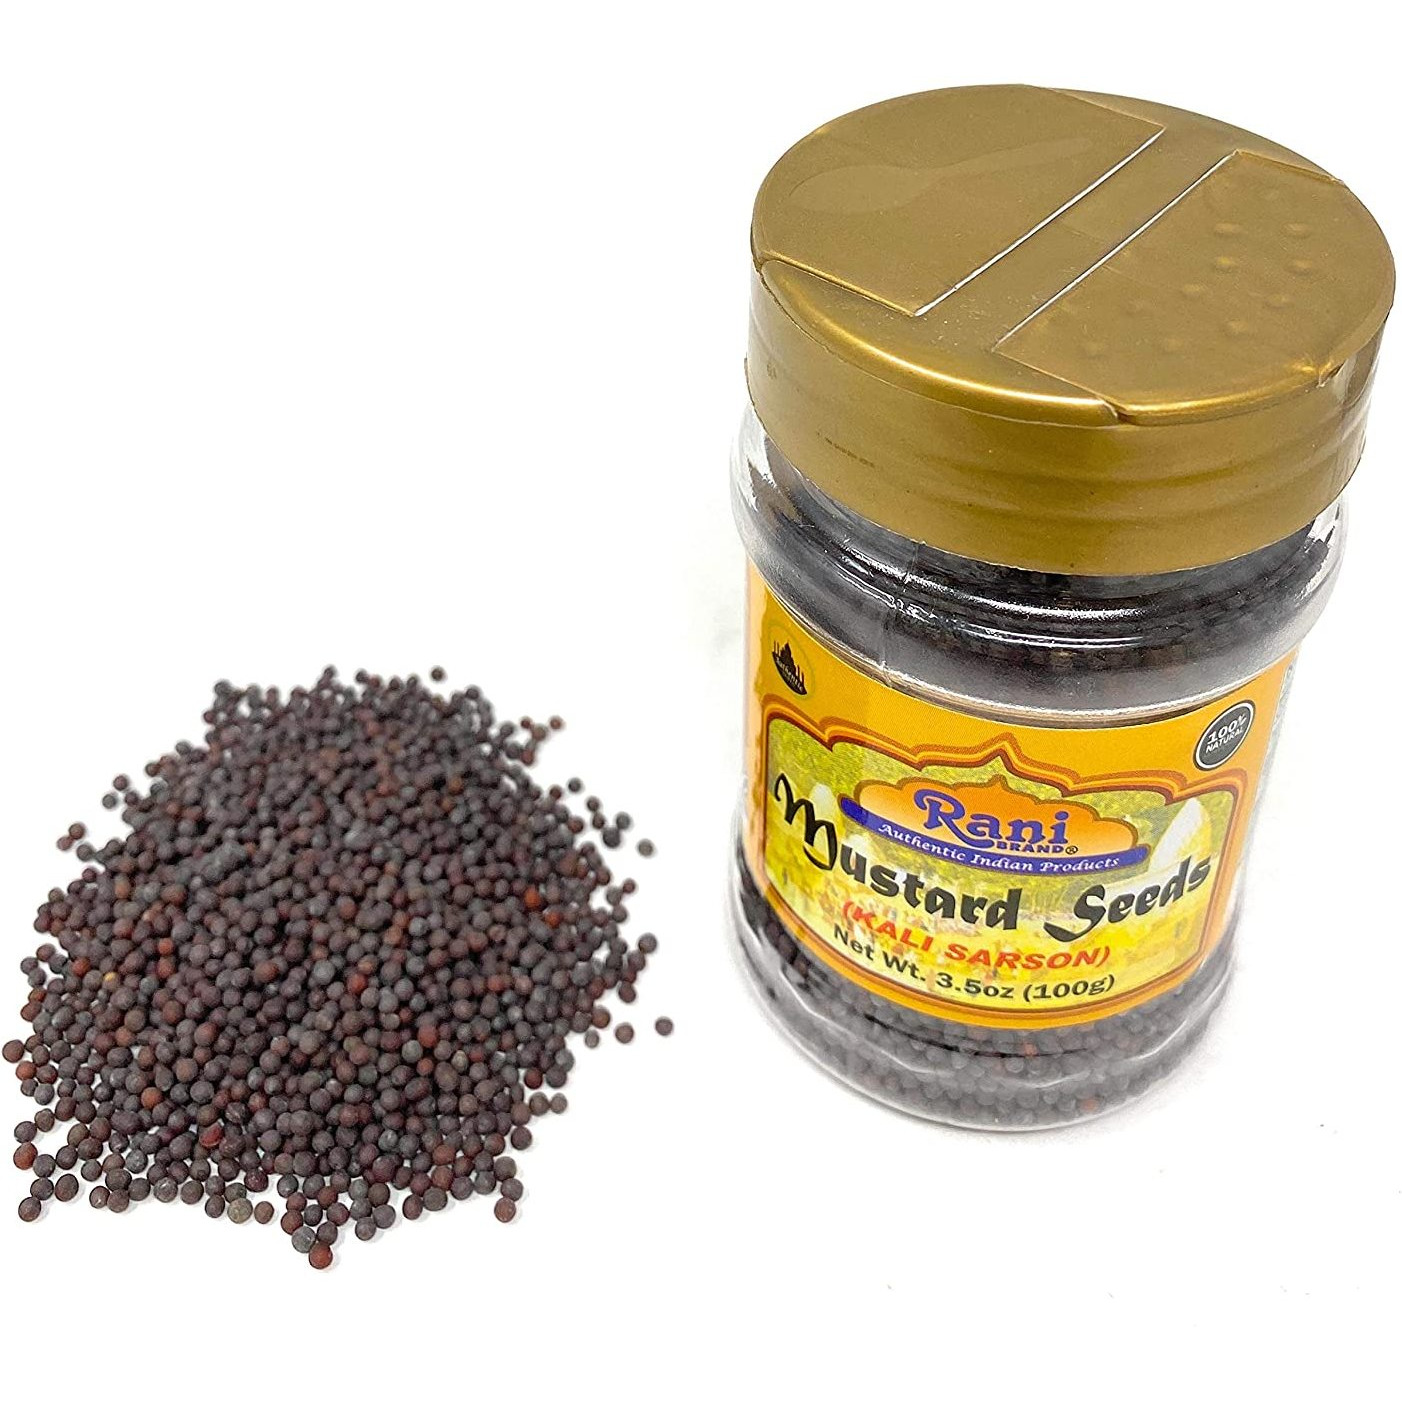 Rani Black Mustard Seeds Whole Spice (Rai Sarson) Jar 3.5oz (100g) All Natural ~ Gluten Free Ingredients | NON-GMO | Vegan | Indian Origin